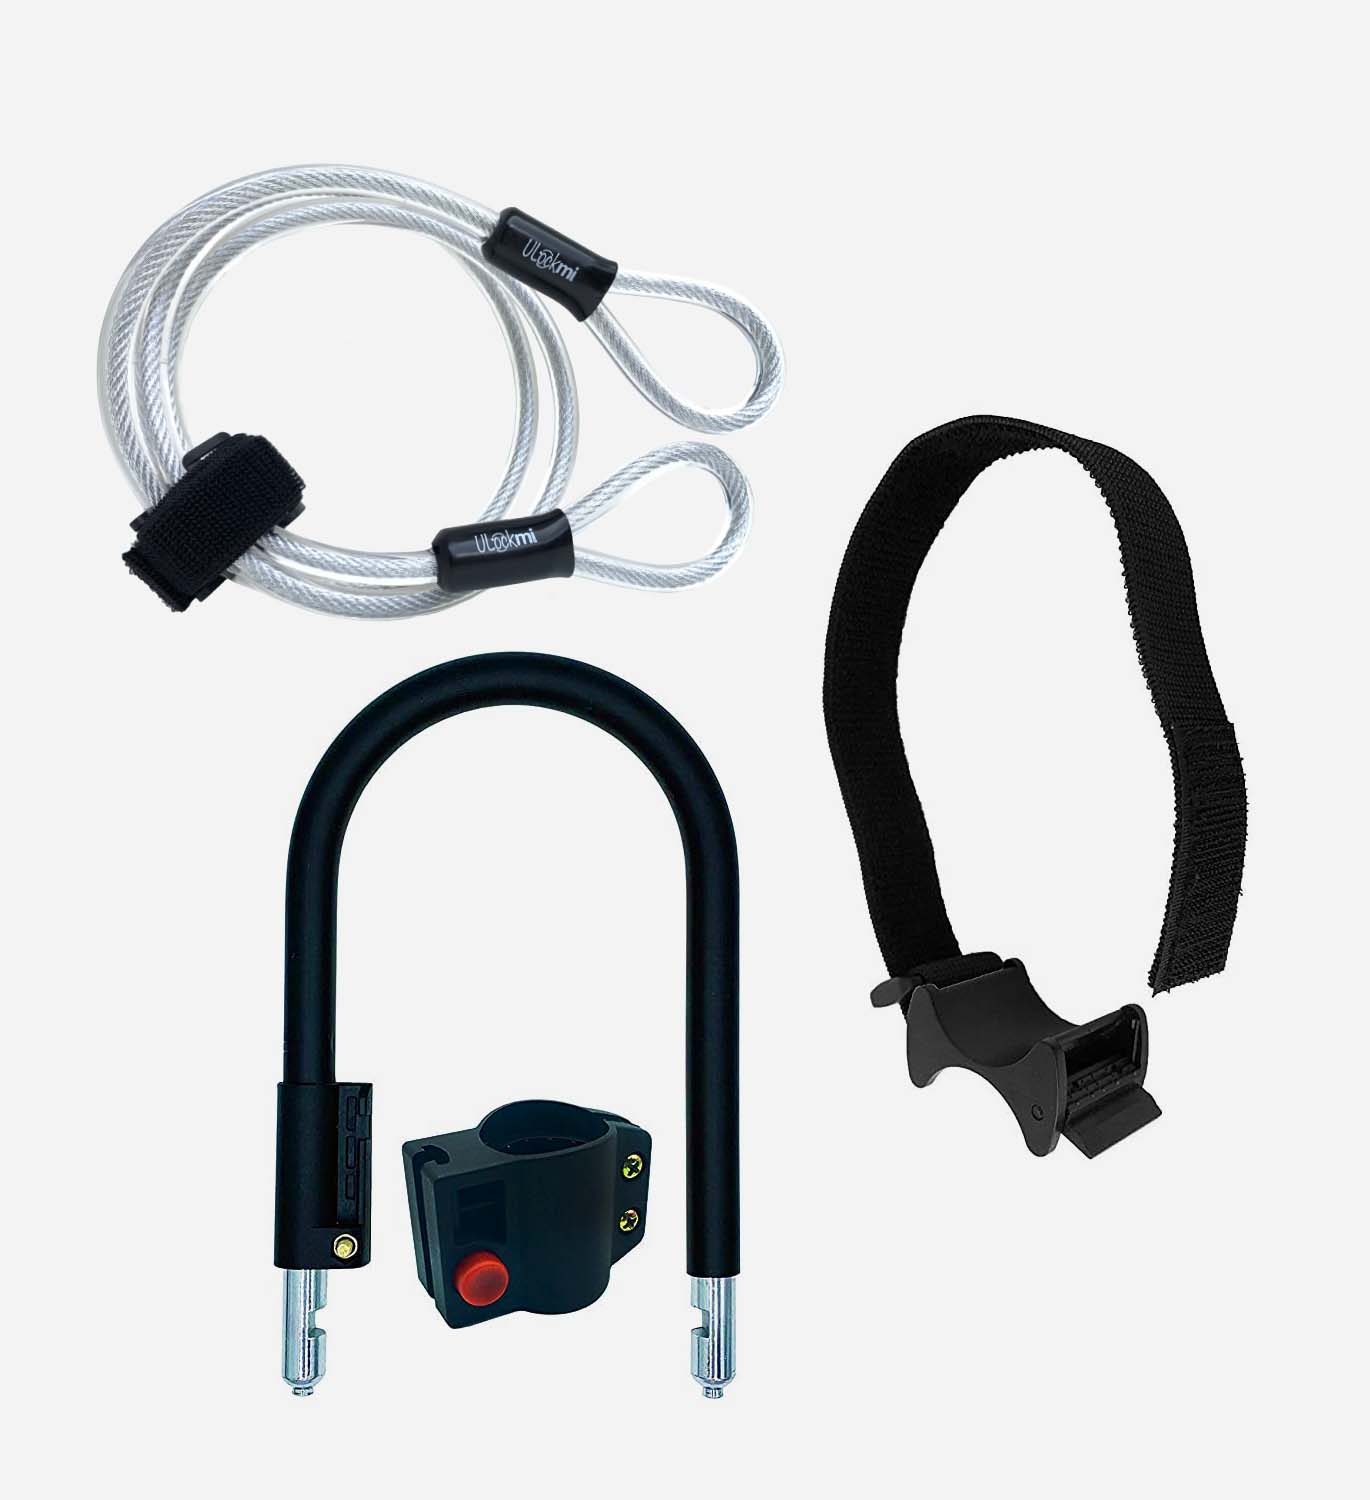 Ulockmi Secure Bike U Lock 16mm D Shackle with Cable, 3 Keys, Mounting Bracket